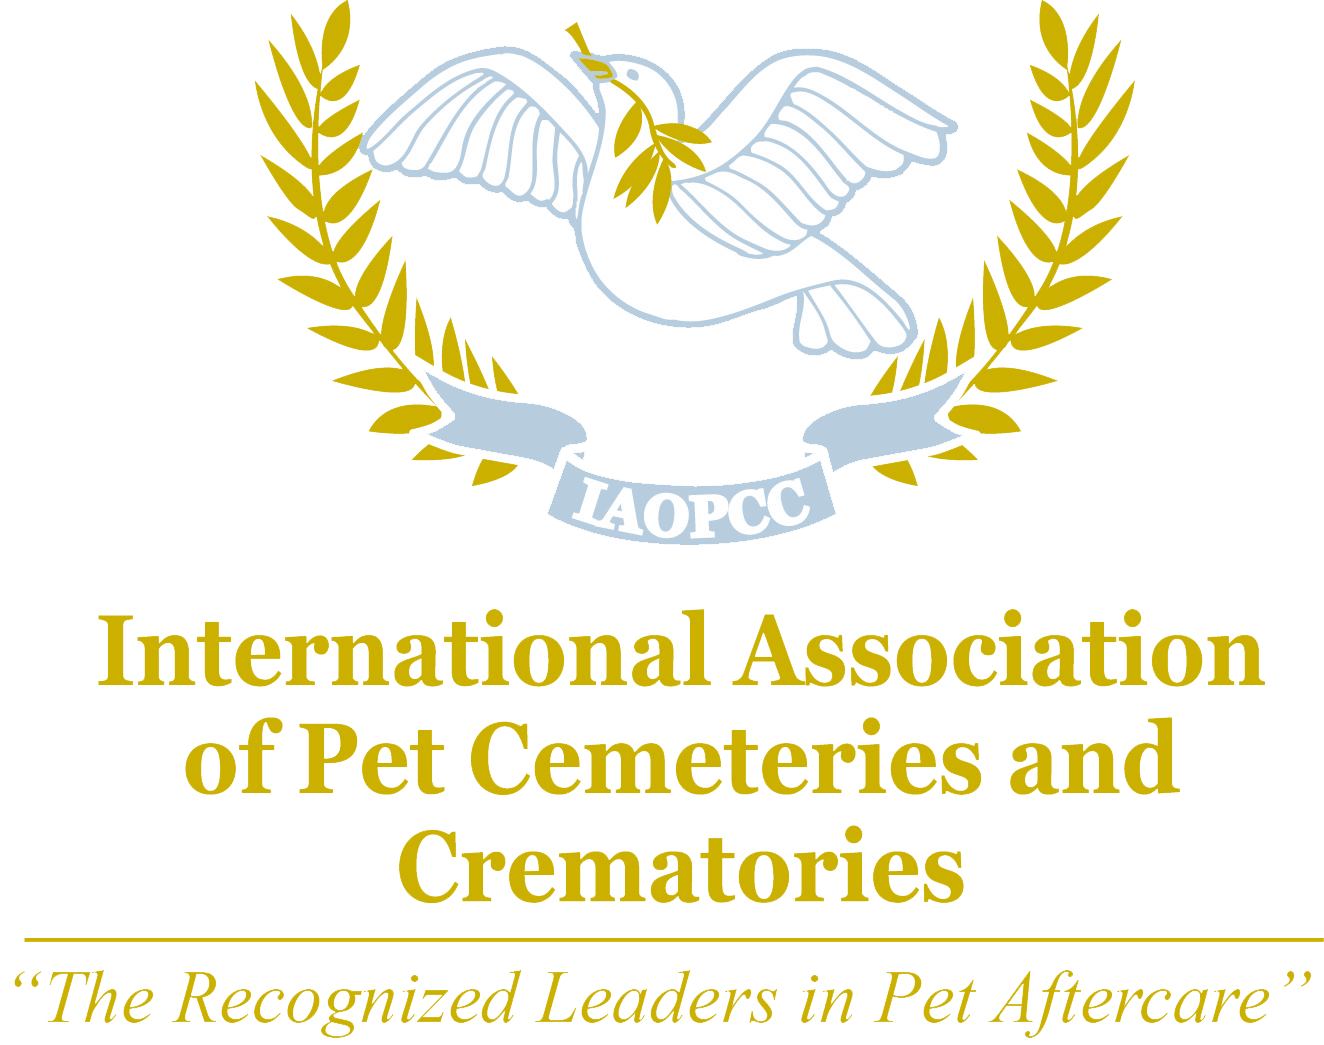 Member of International Association of Pet Cemeteries and Crematories